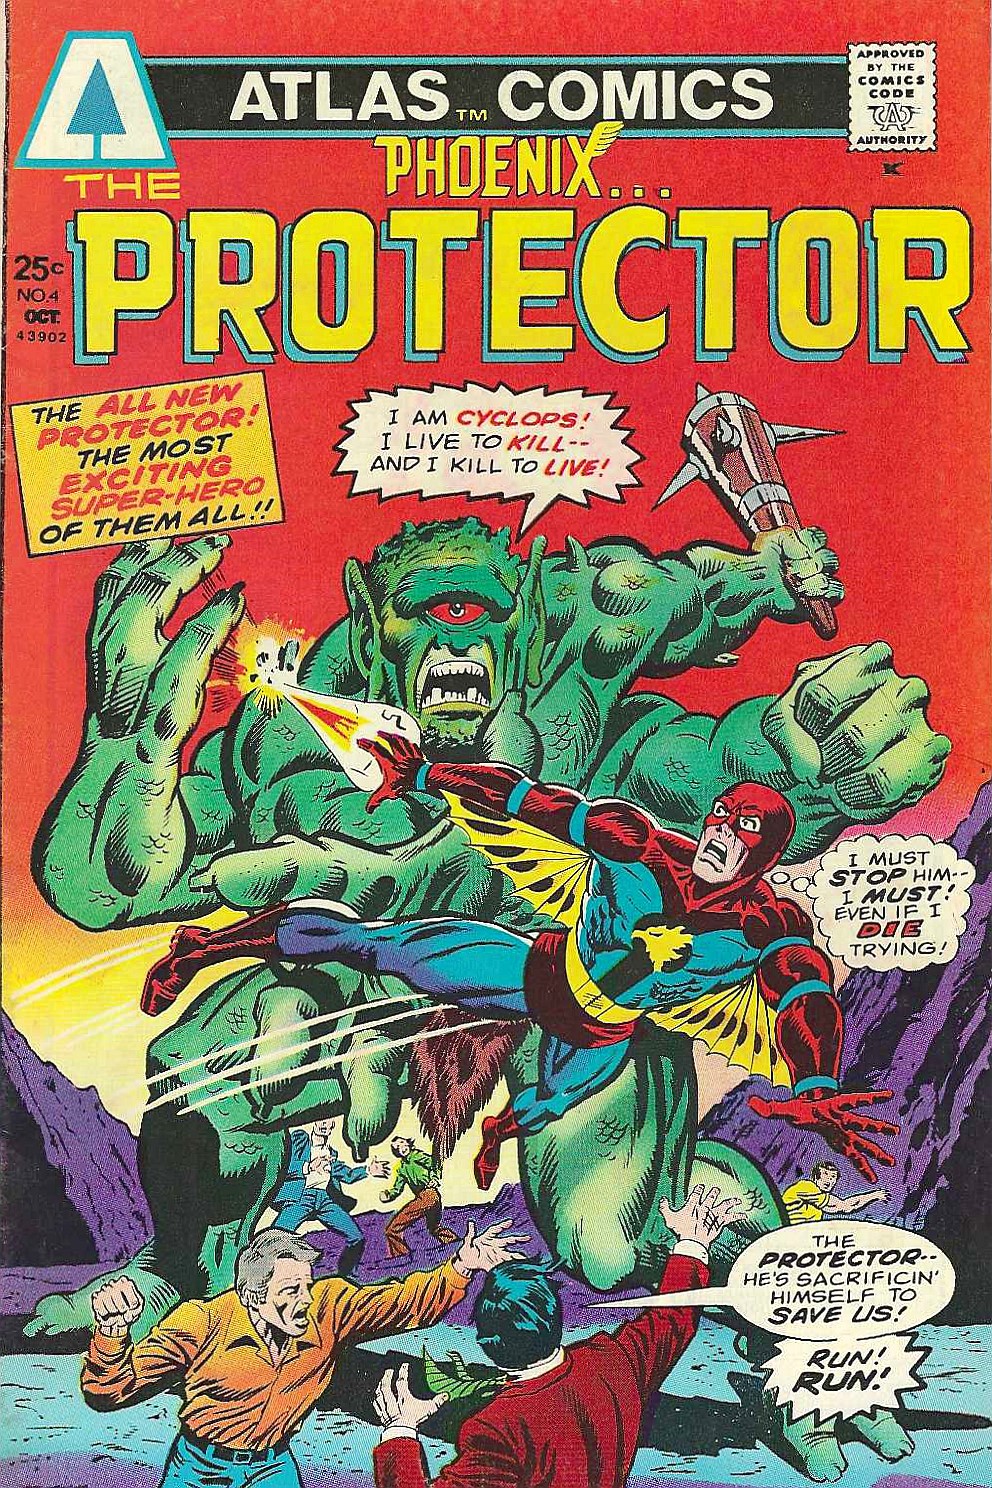 Pheonix #4 The Protector